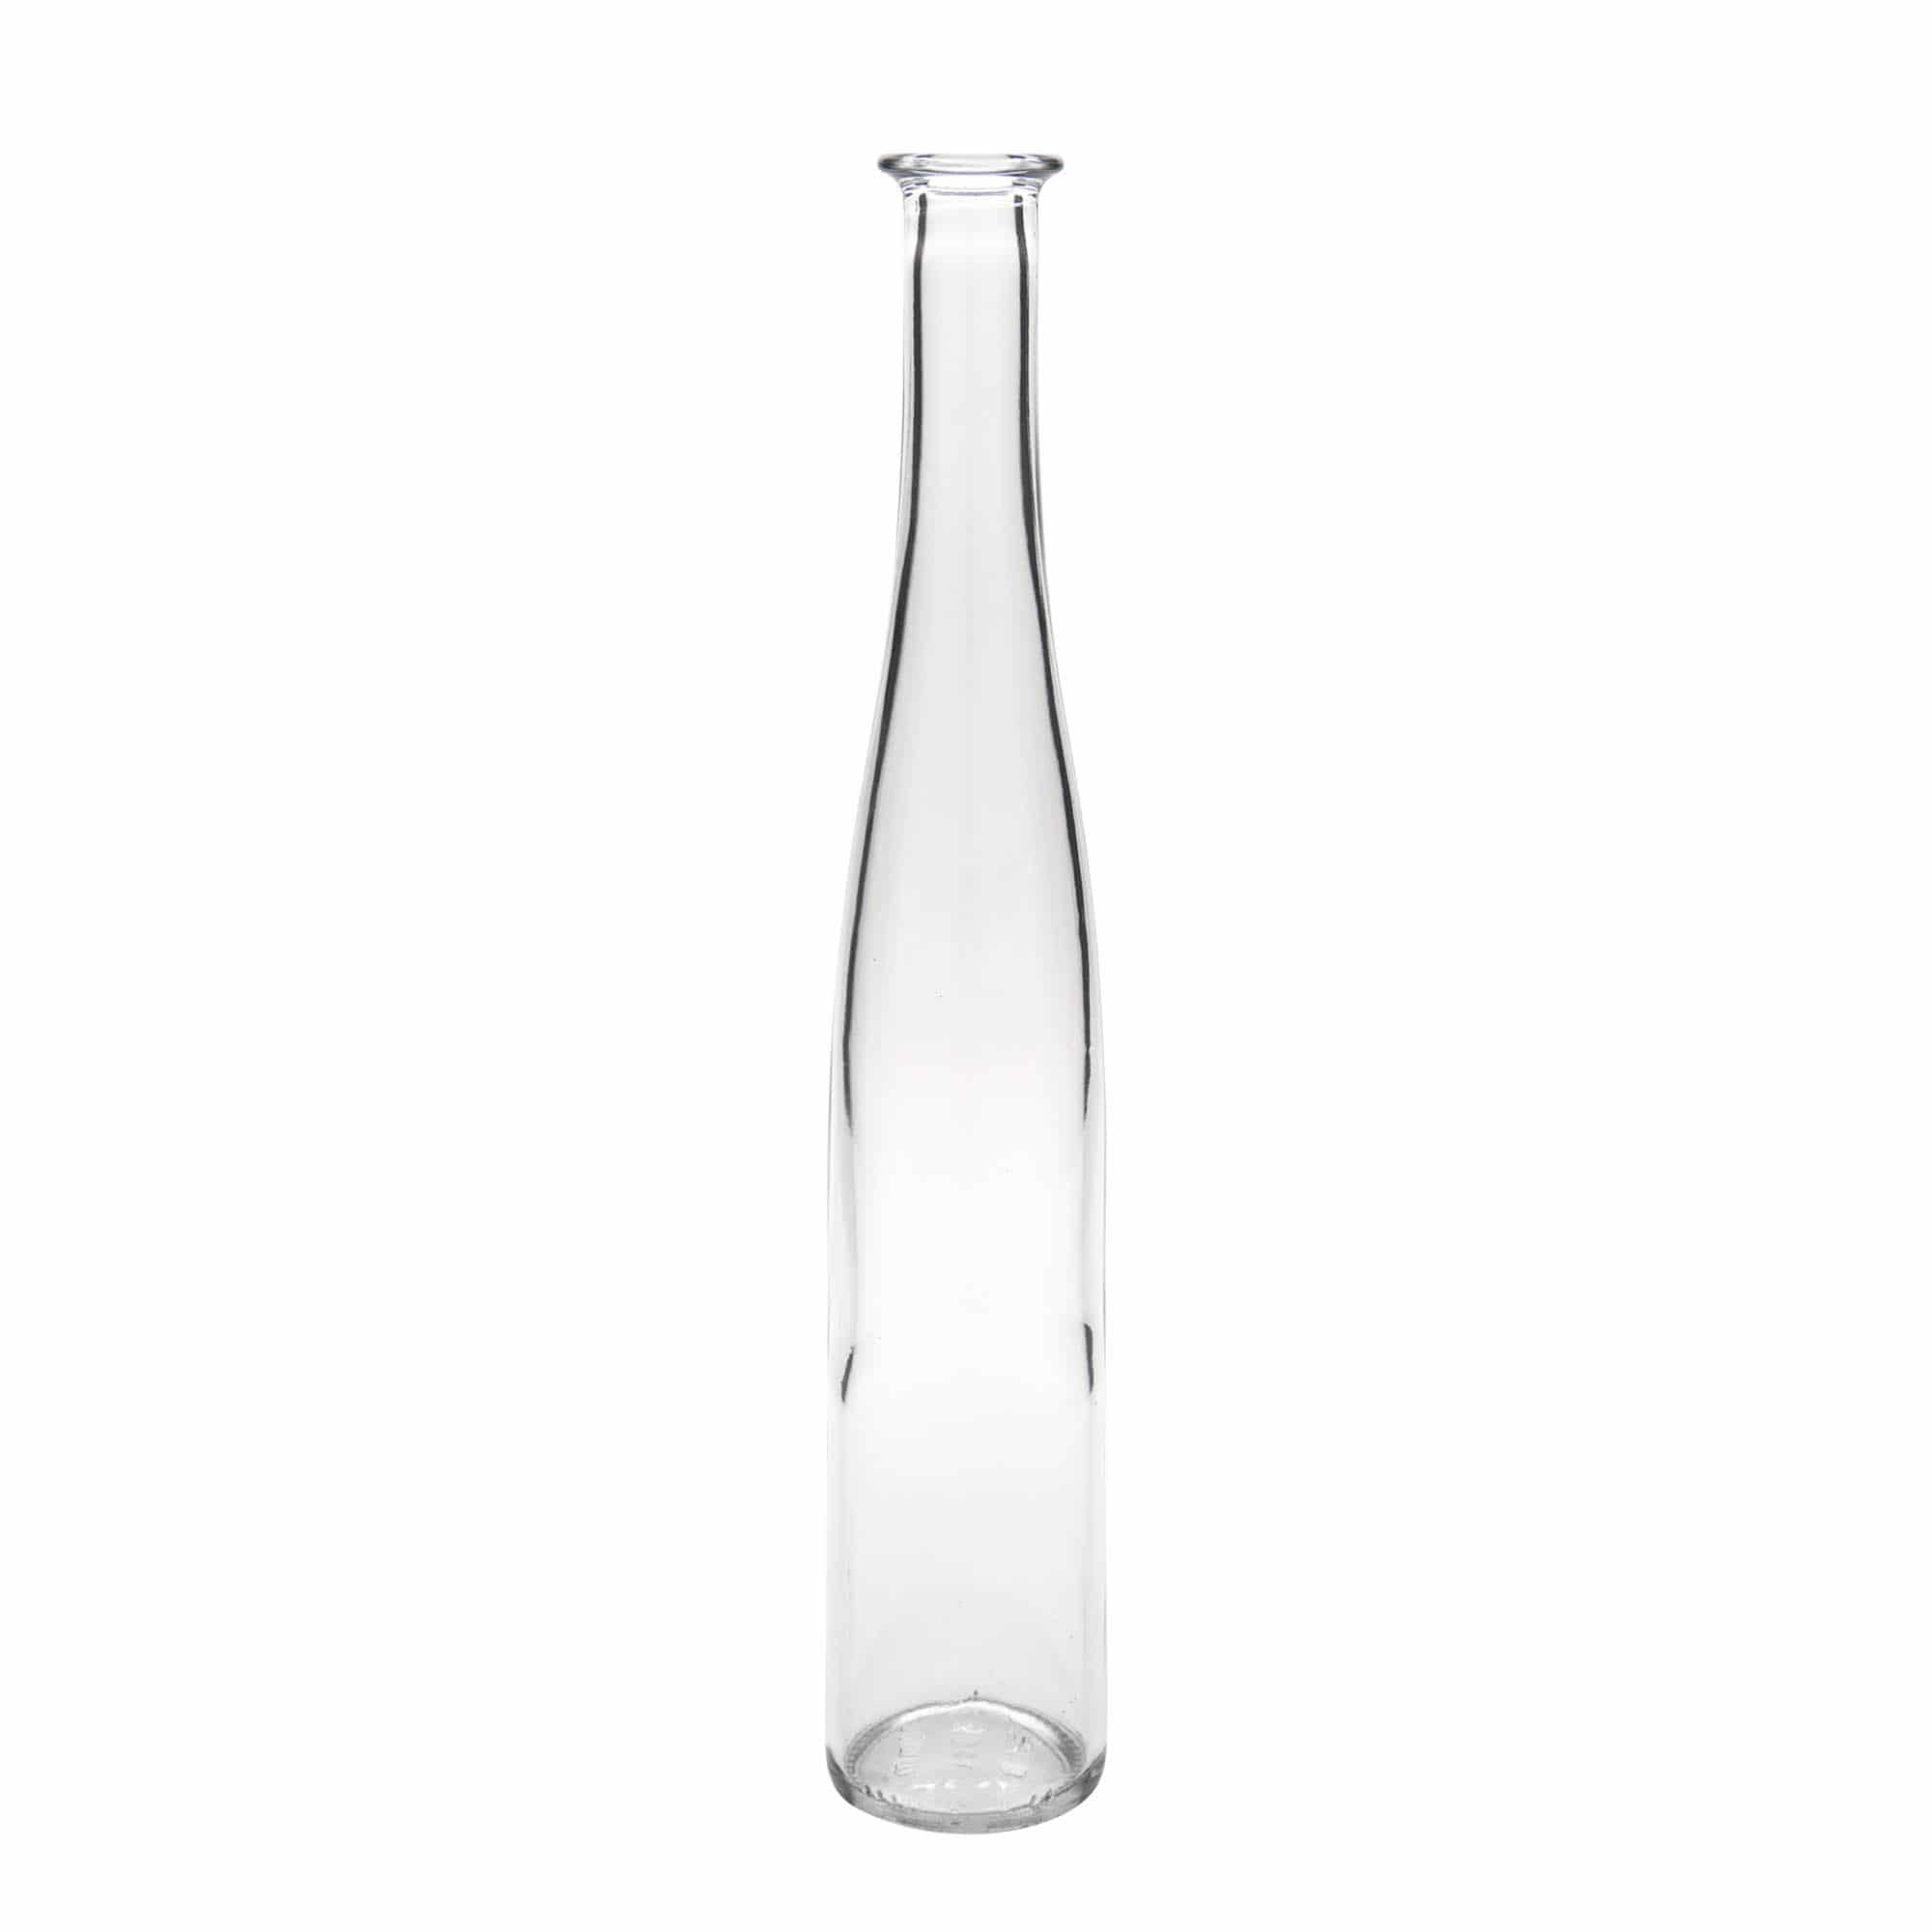 500 ml glass bottle 'Renana Futura', closure: cork